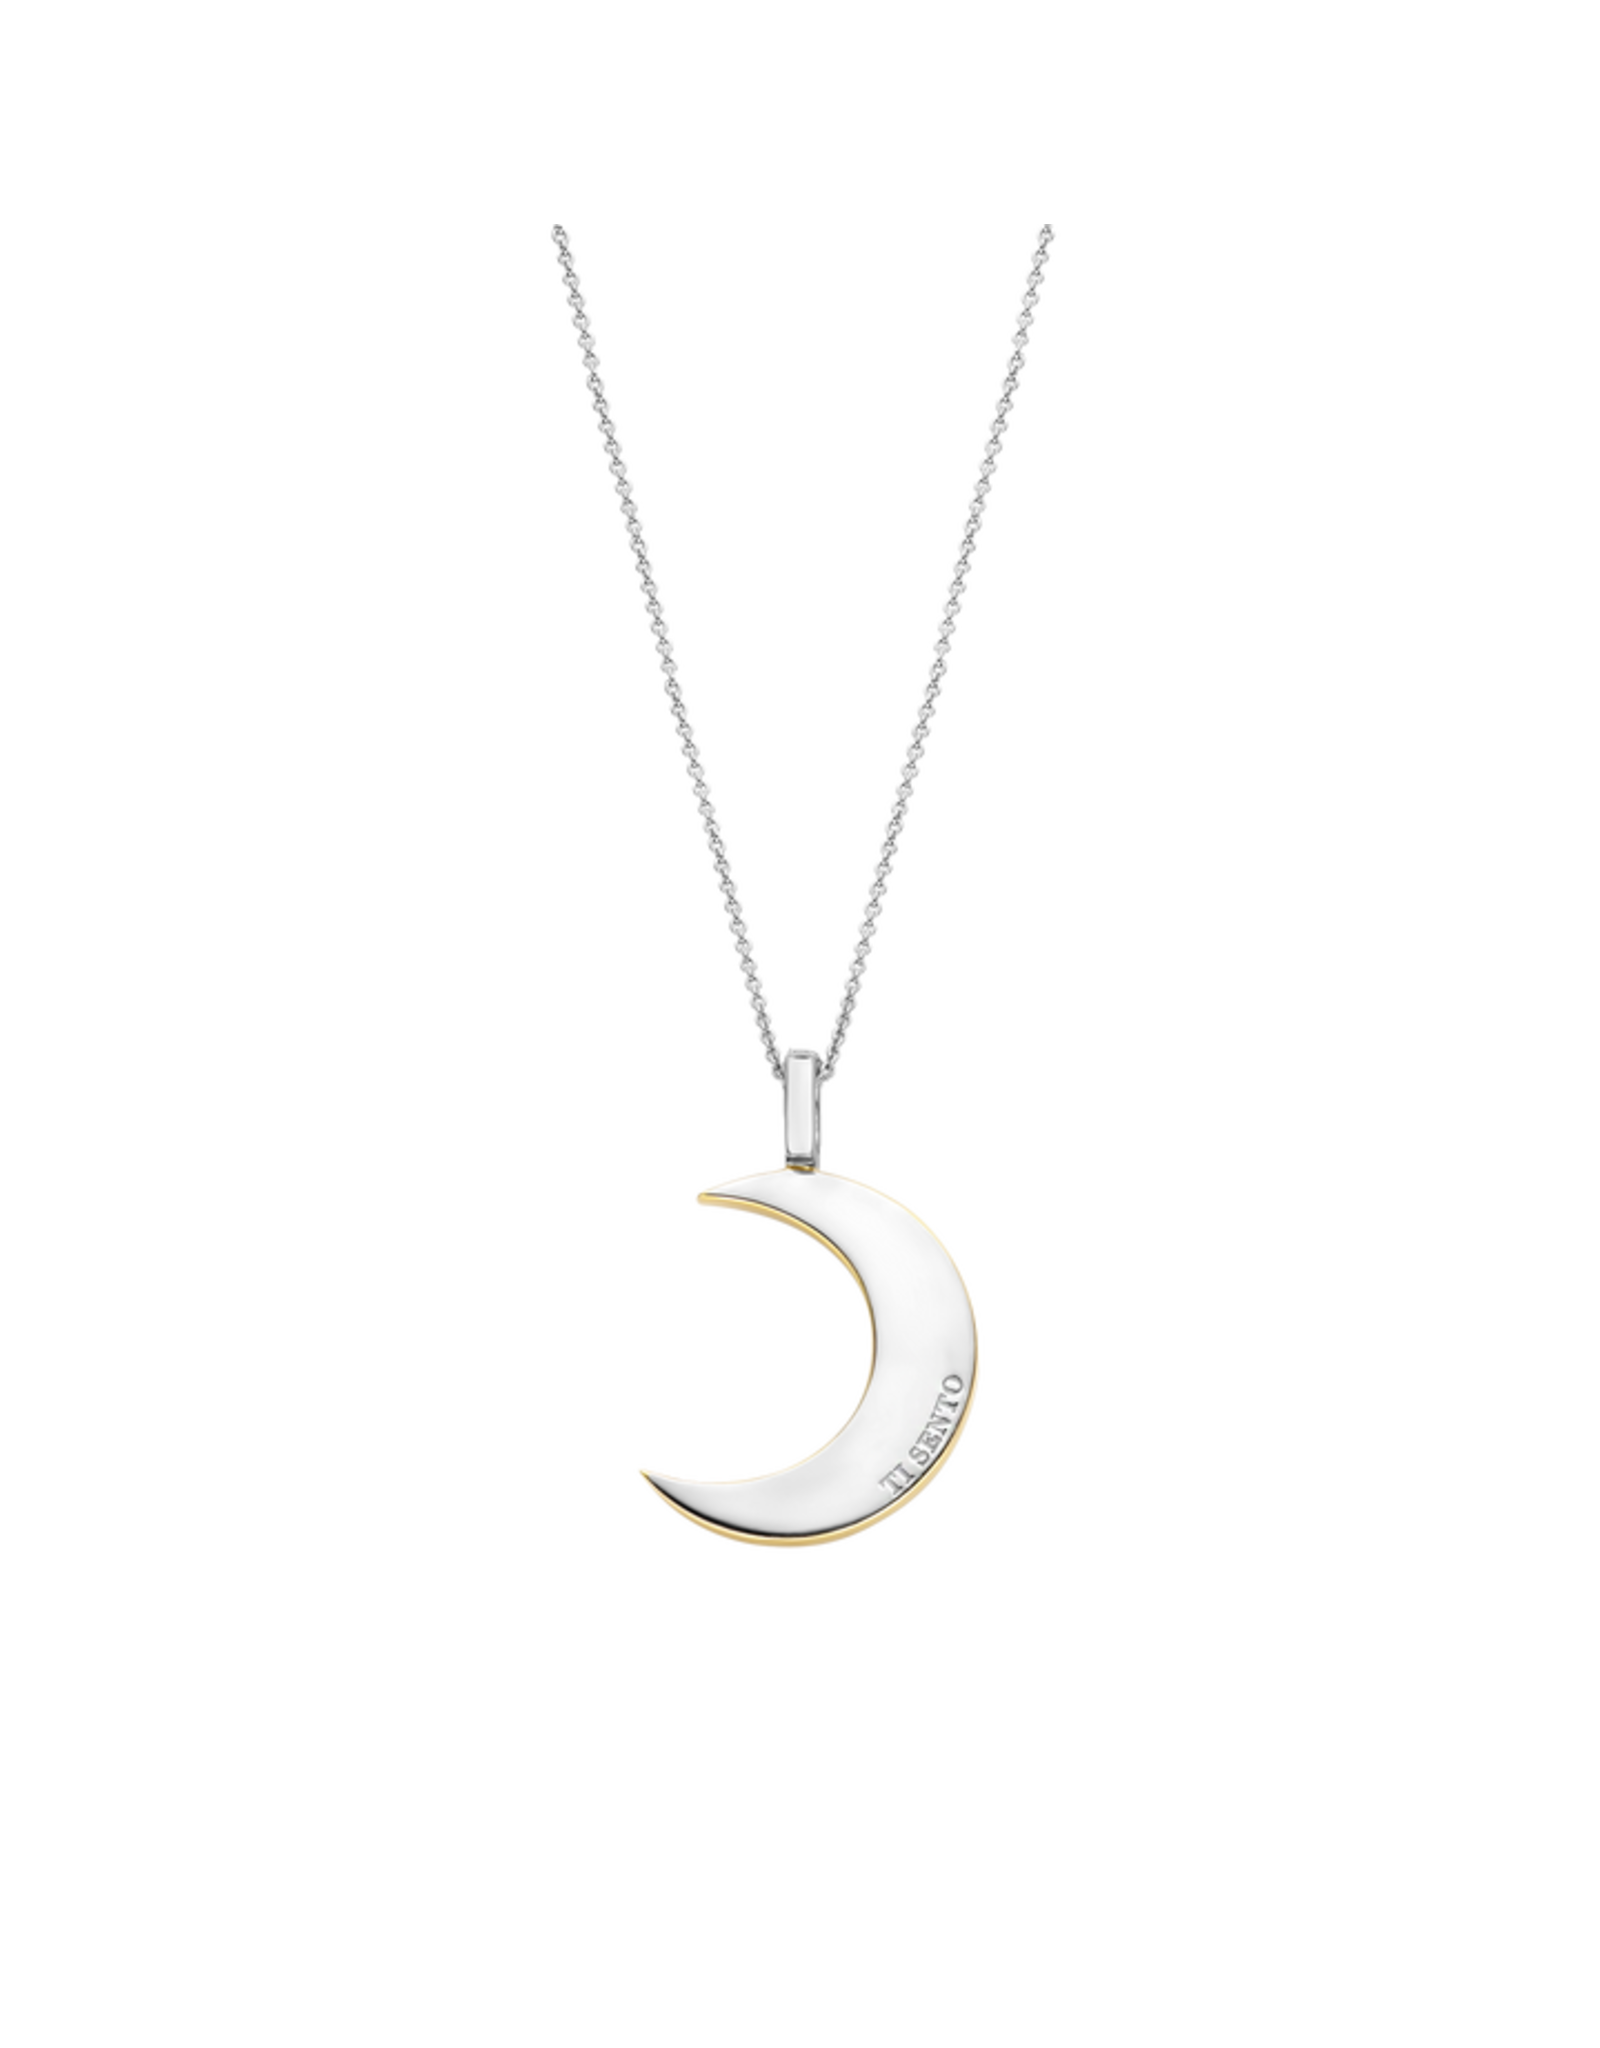 Pearl Crescent Moon Pendant